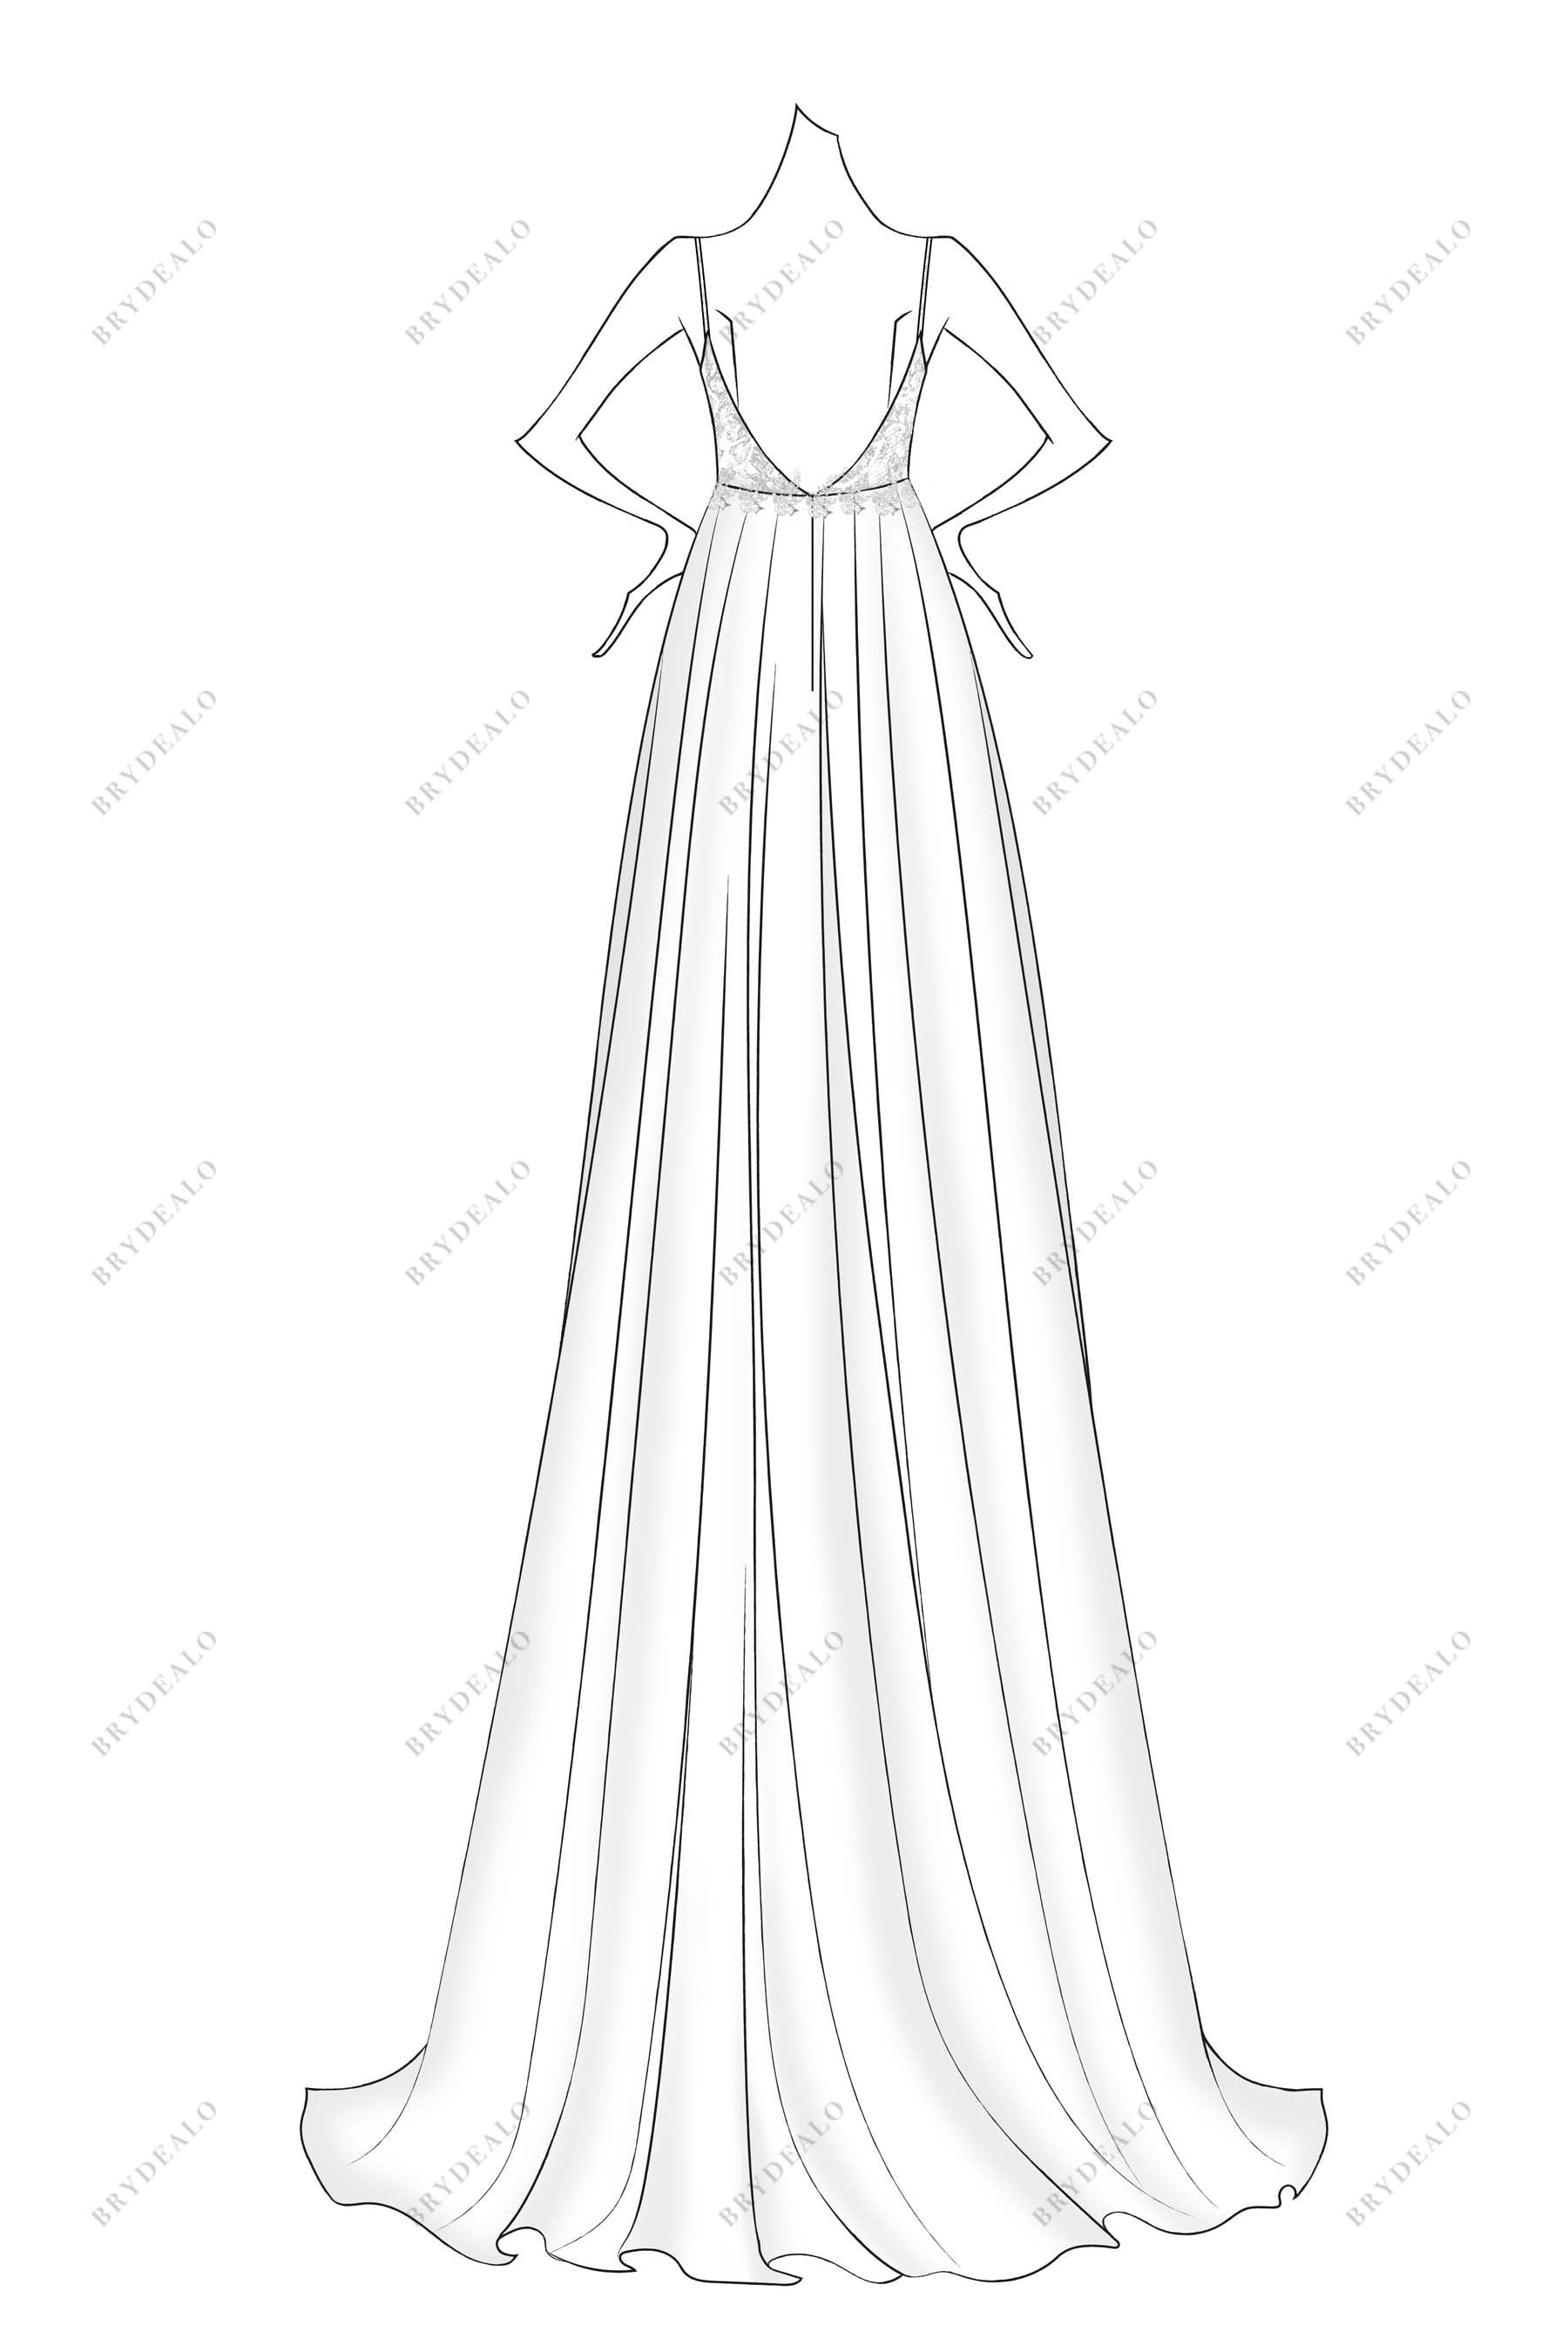 open back A-line chiffon bridal dress sketch